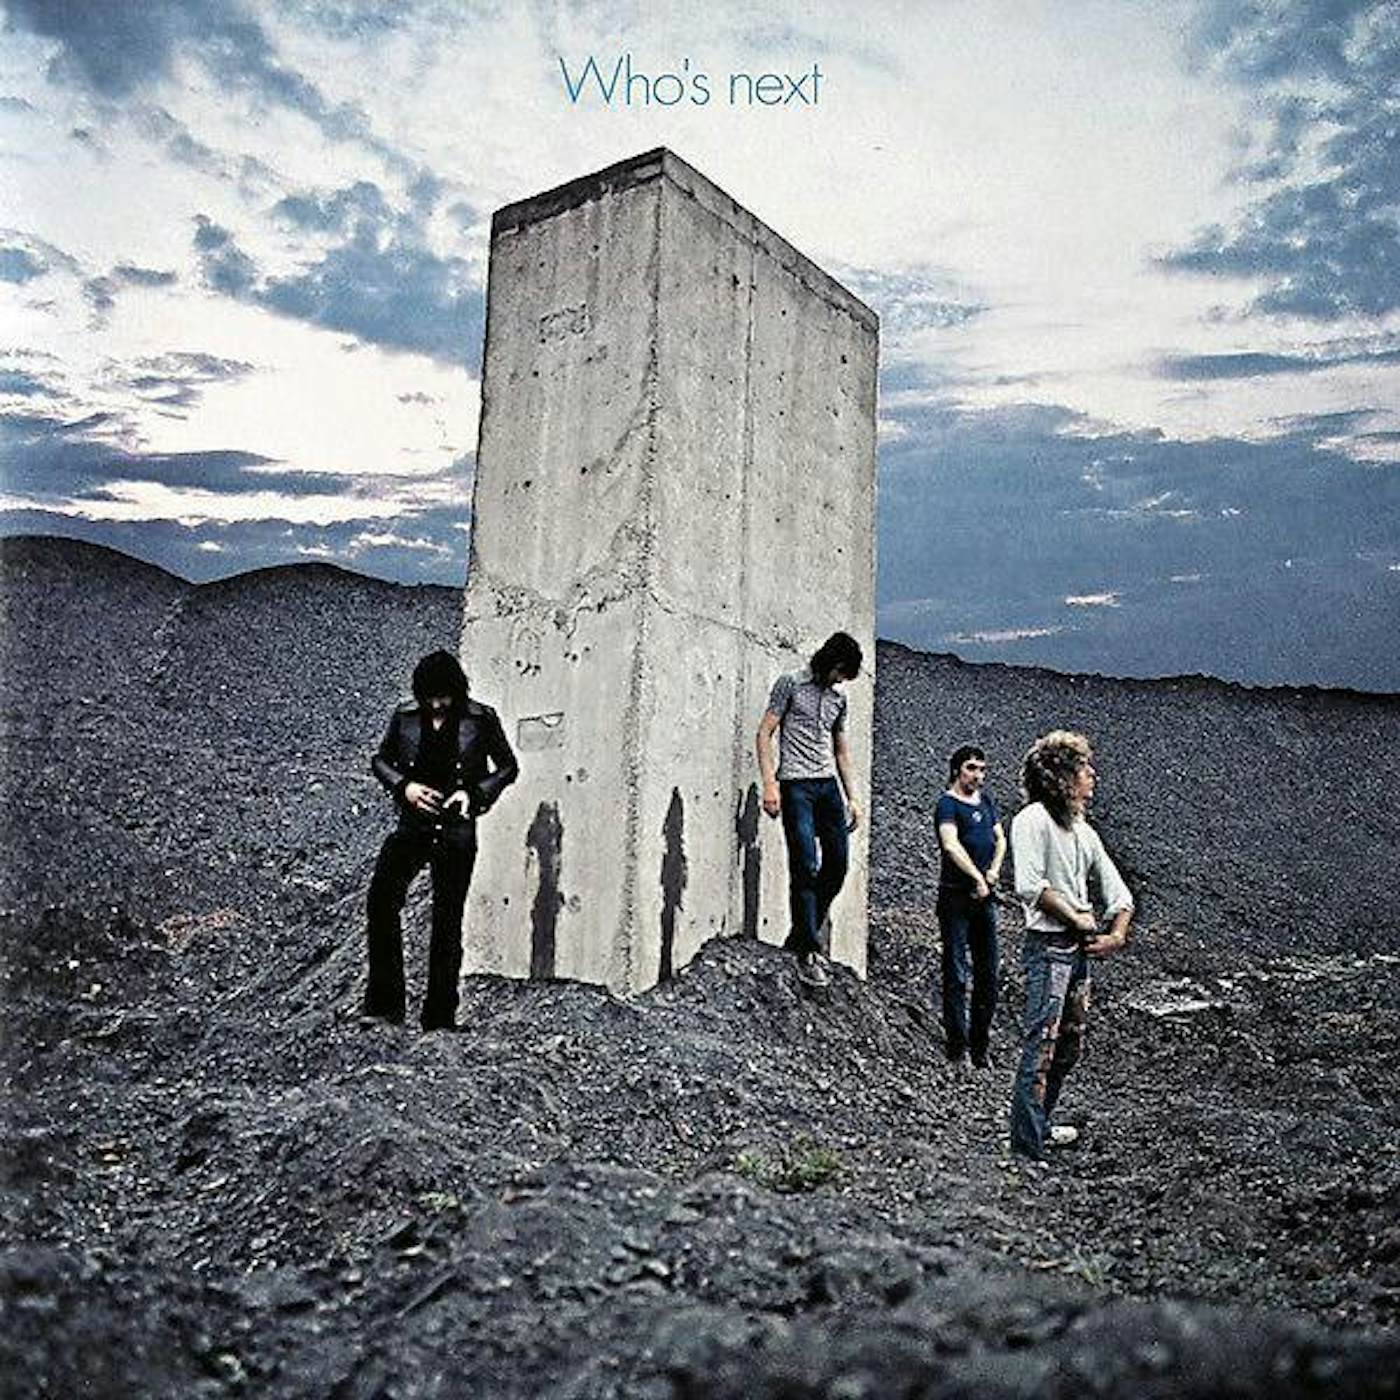 The Who's Next vinyl record